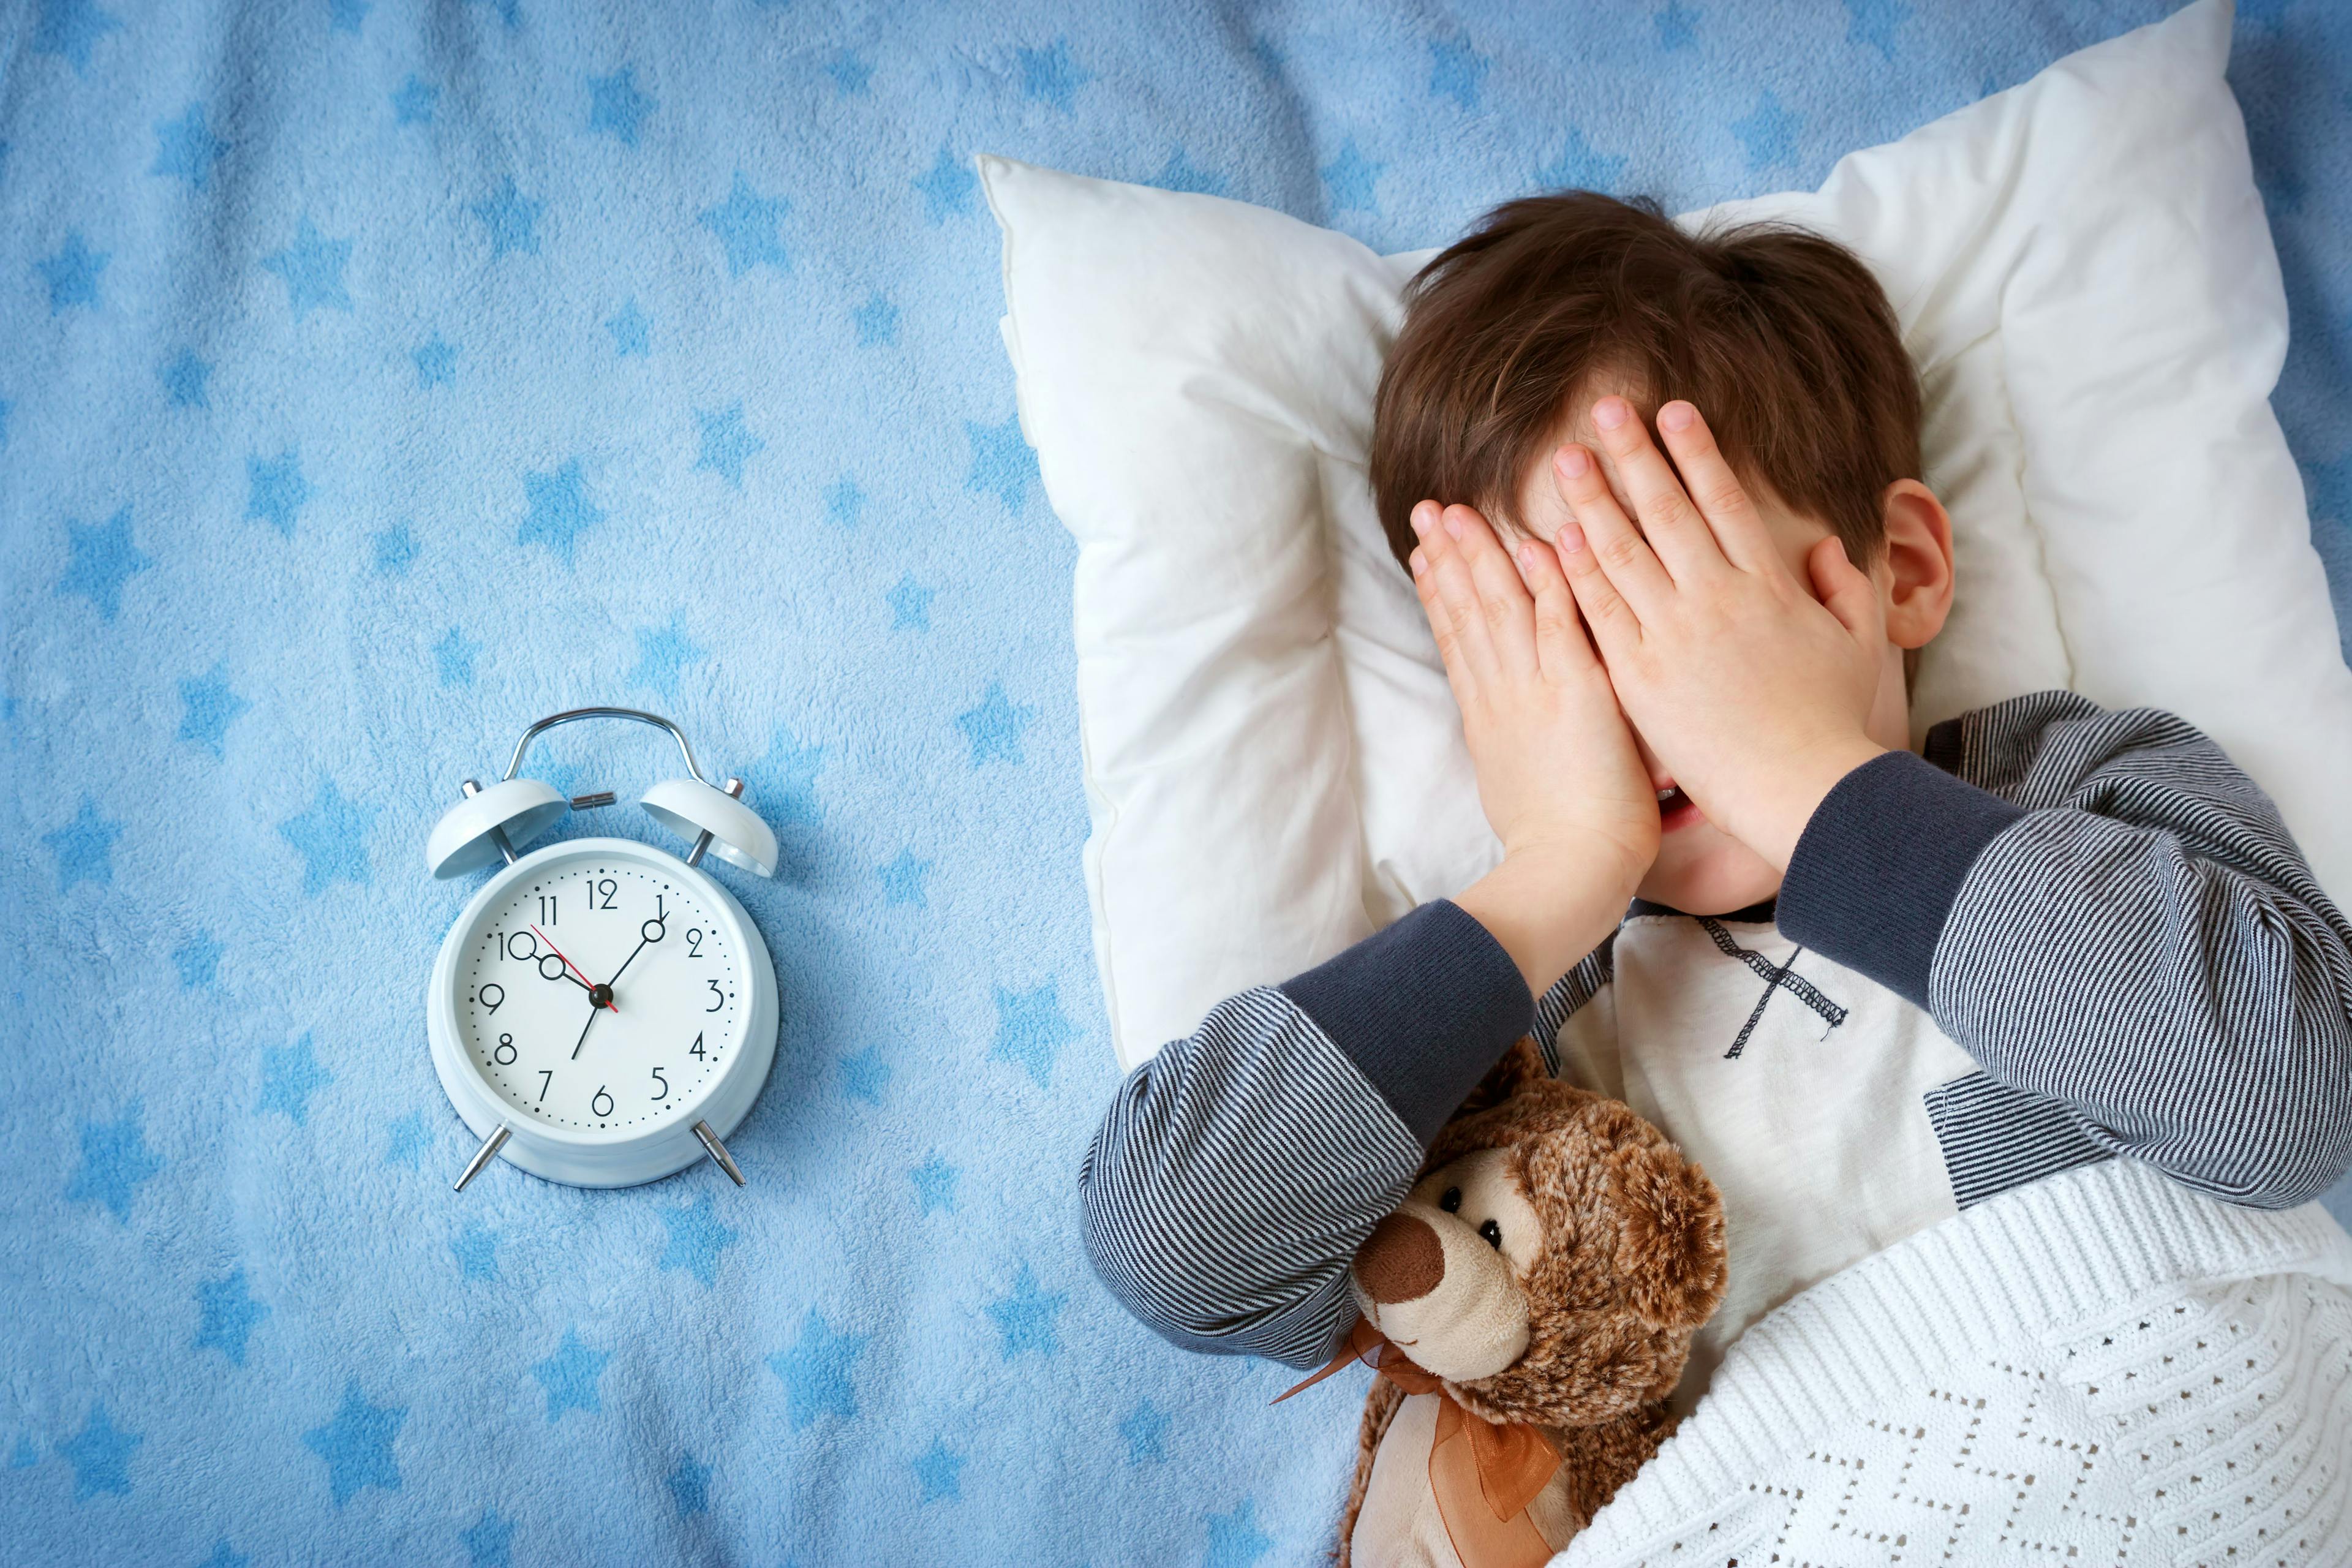 Connections between autism risk, sleep disturbances, insomnia risk genes and circadian pathways were analyzed.